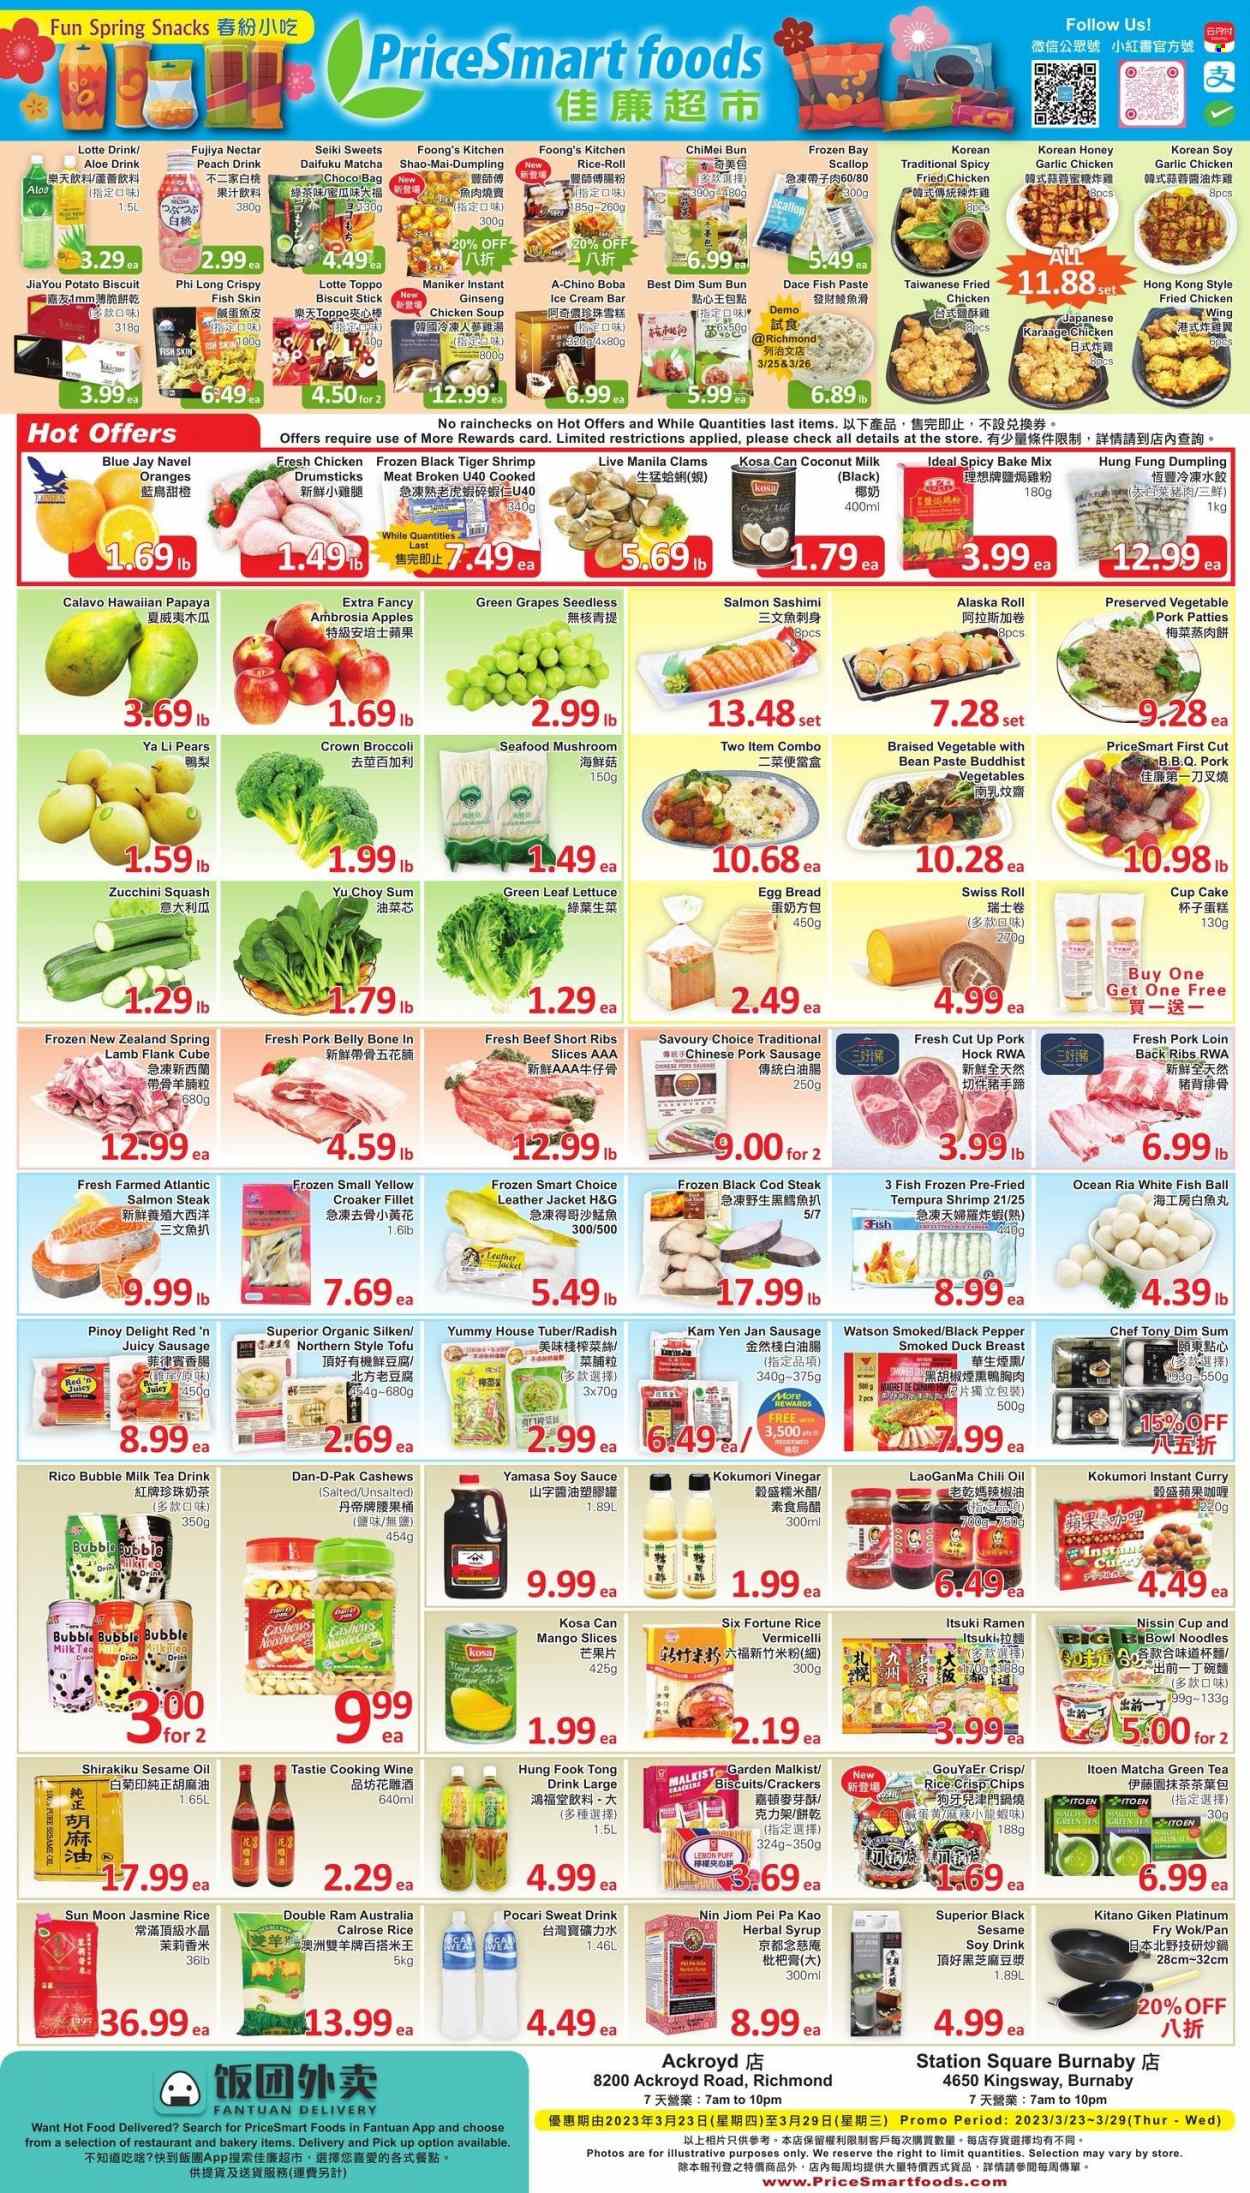 thumbnail - Circulaire PriceSmart Foods - 23 Mars 2023 - 29 Mars 2023 - Produits soldés - magret de canard, steak, lotte, biscuits, LU, chips, crackers, tofu, sésame, curry, noix, nectar. Page 1.